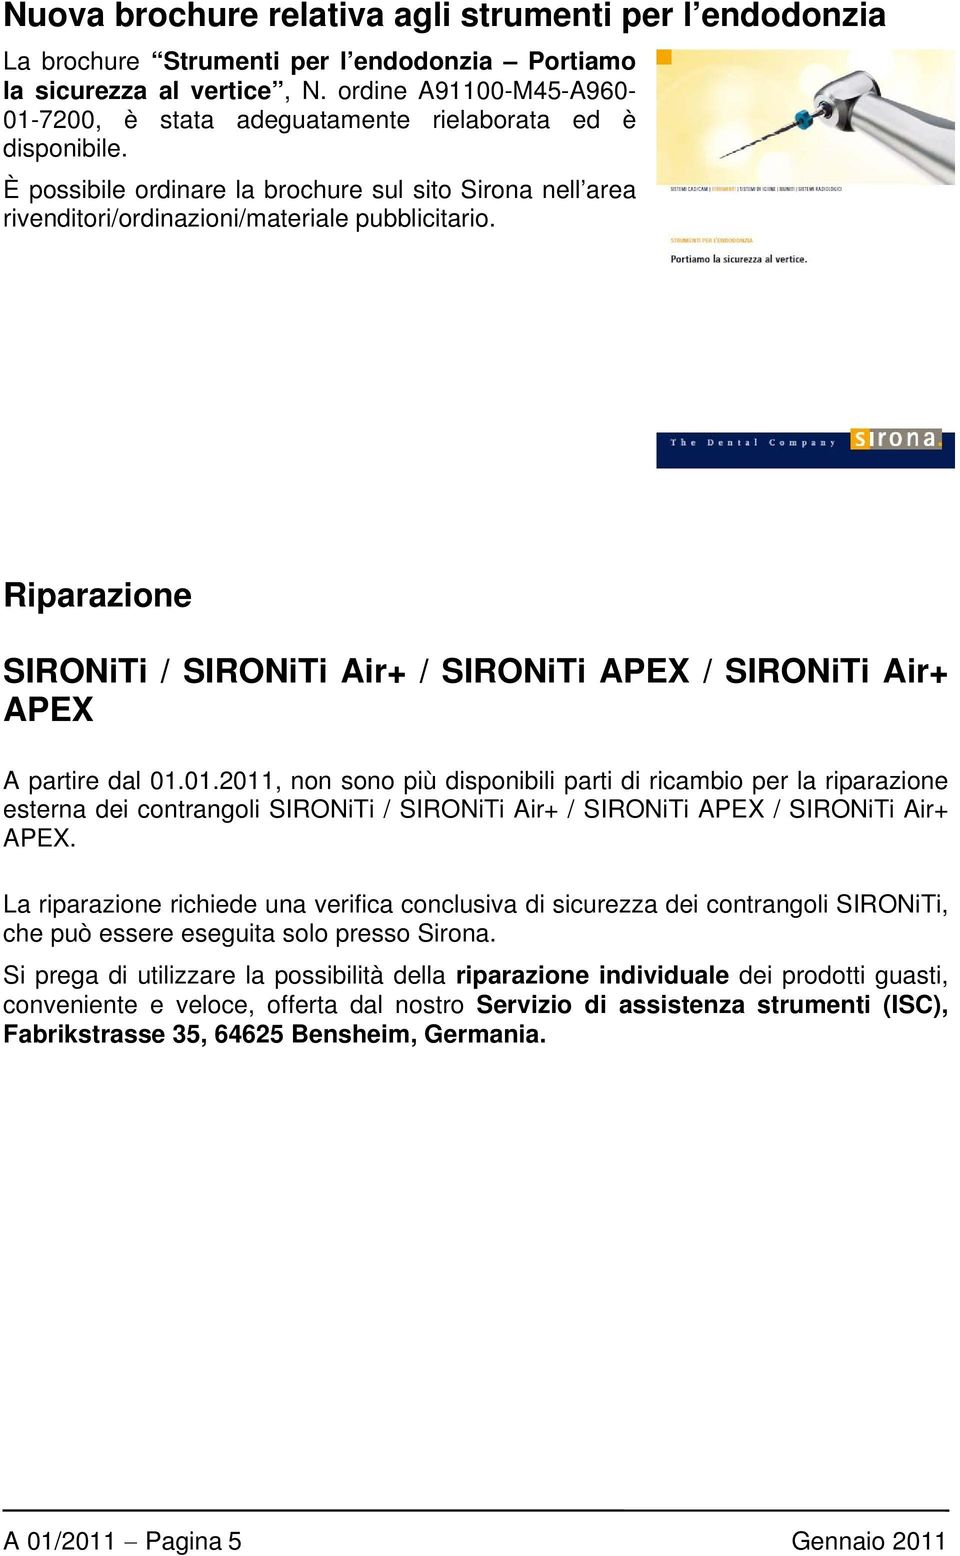 Riparazione SIRONiTi / SIRONiTi Air+ / SIRONiTi APEX / SIRONiTi Air+ APEX A partire dal 01.